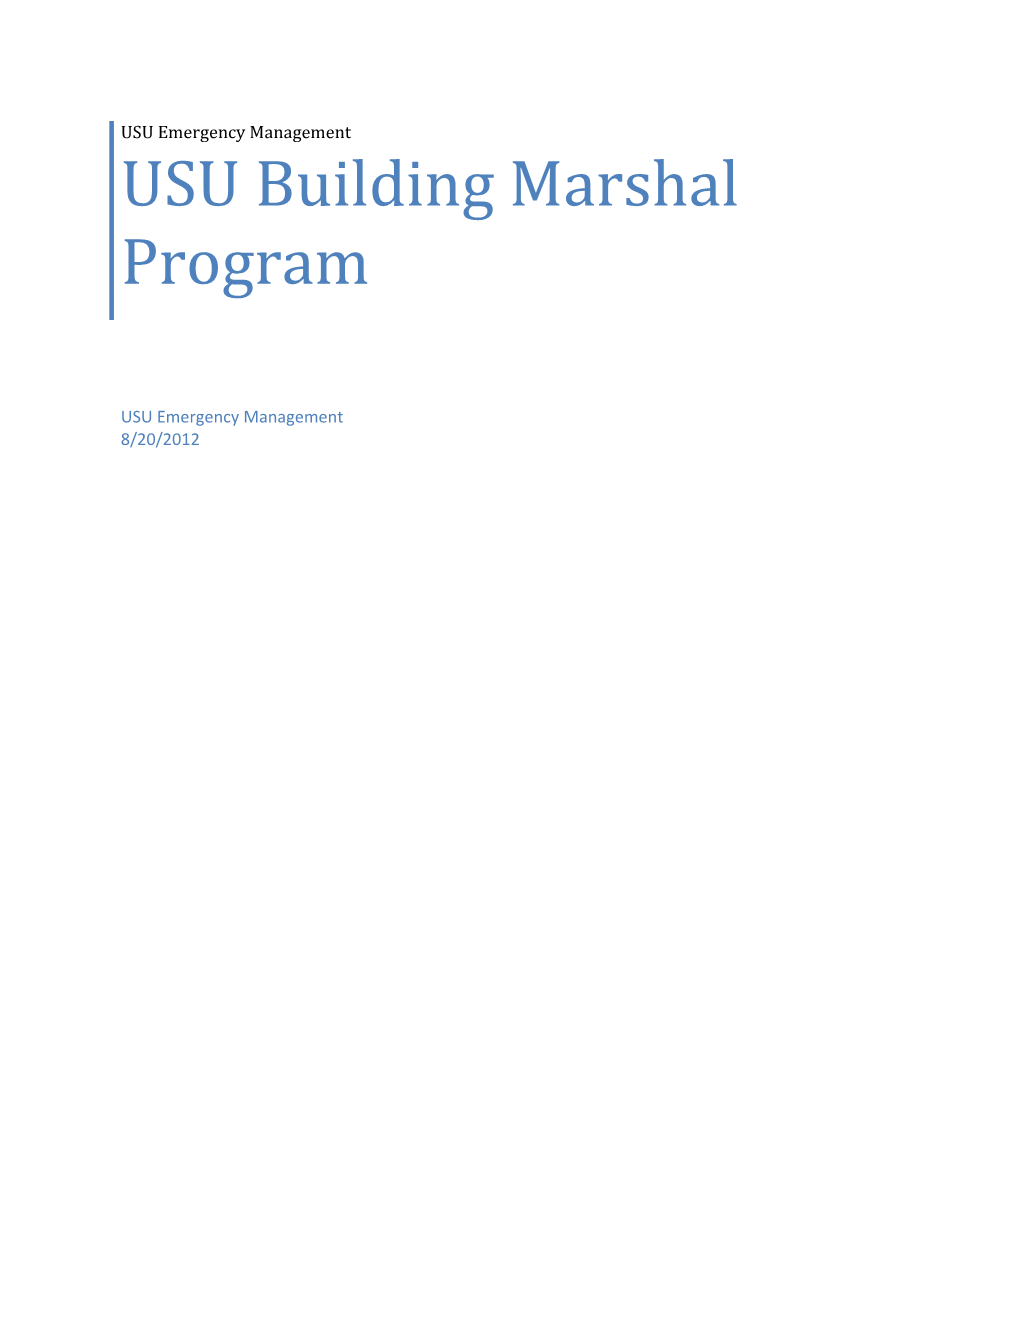 USU Building Marshal Program